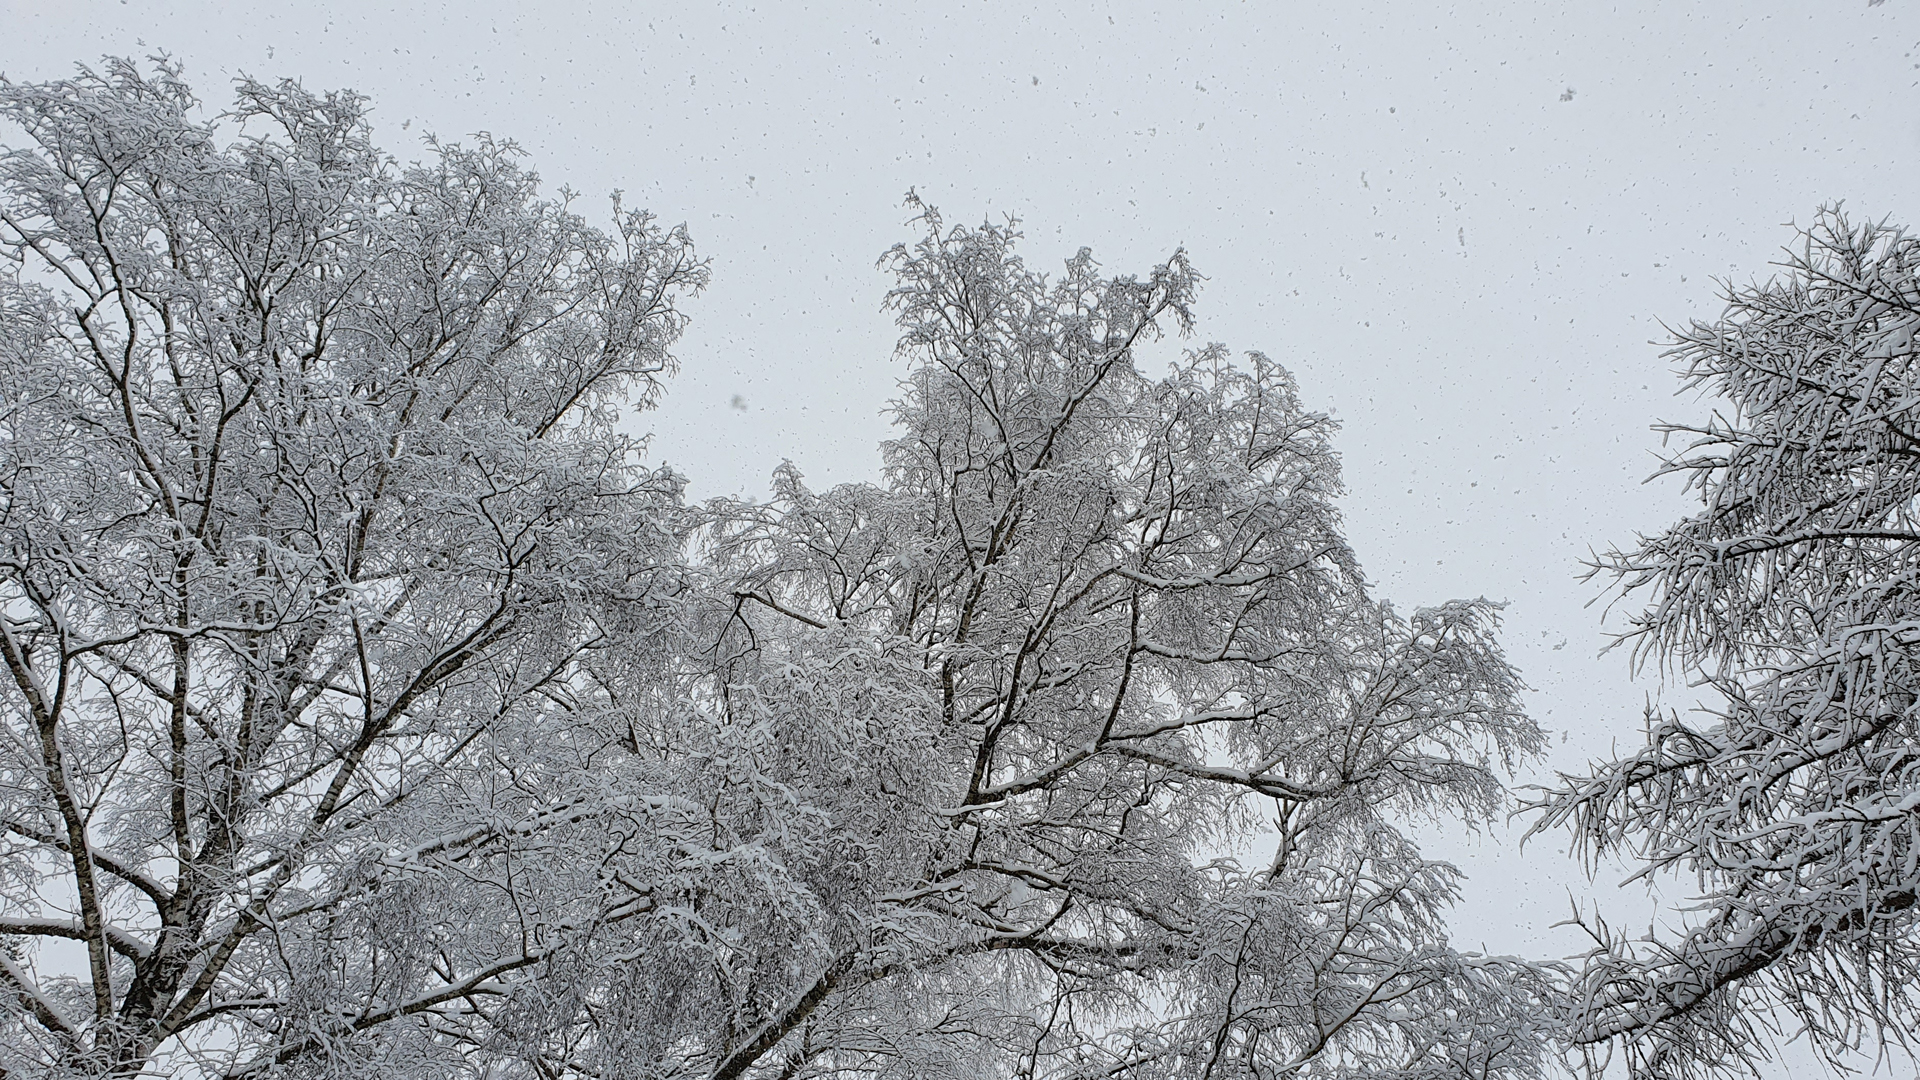 Fotostrecke Schnee Abbildung 16: The magic of fresh fallen snow